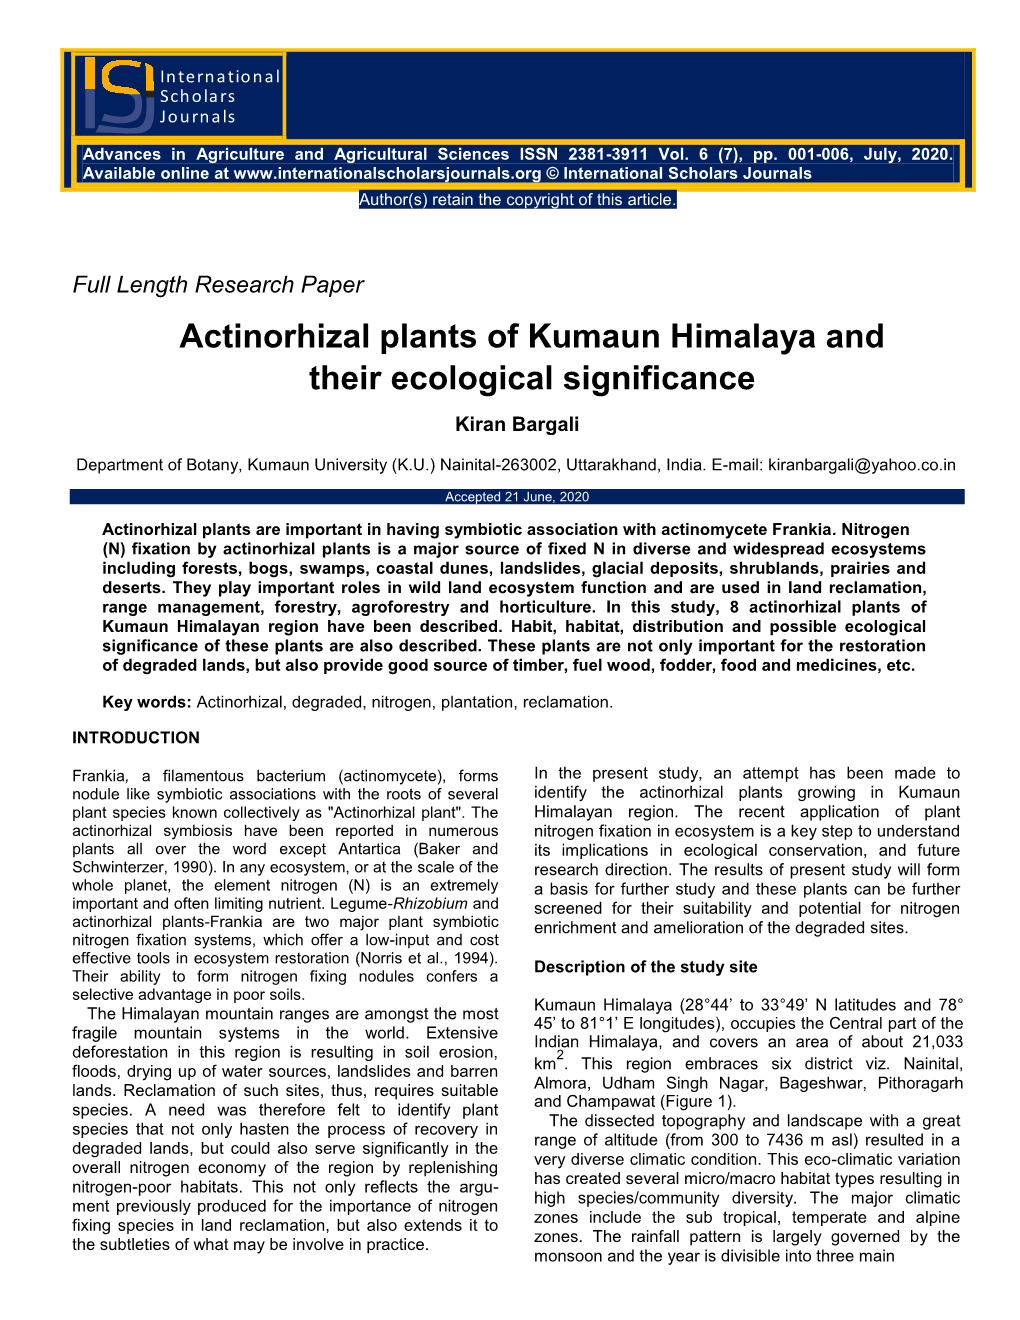 Actinorhizal Plants of Kumaun Himalaya and Their Ecological